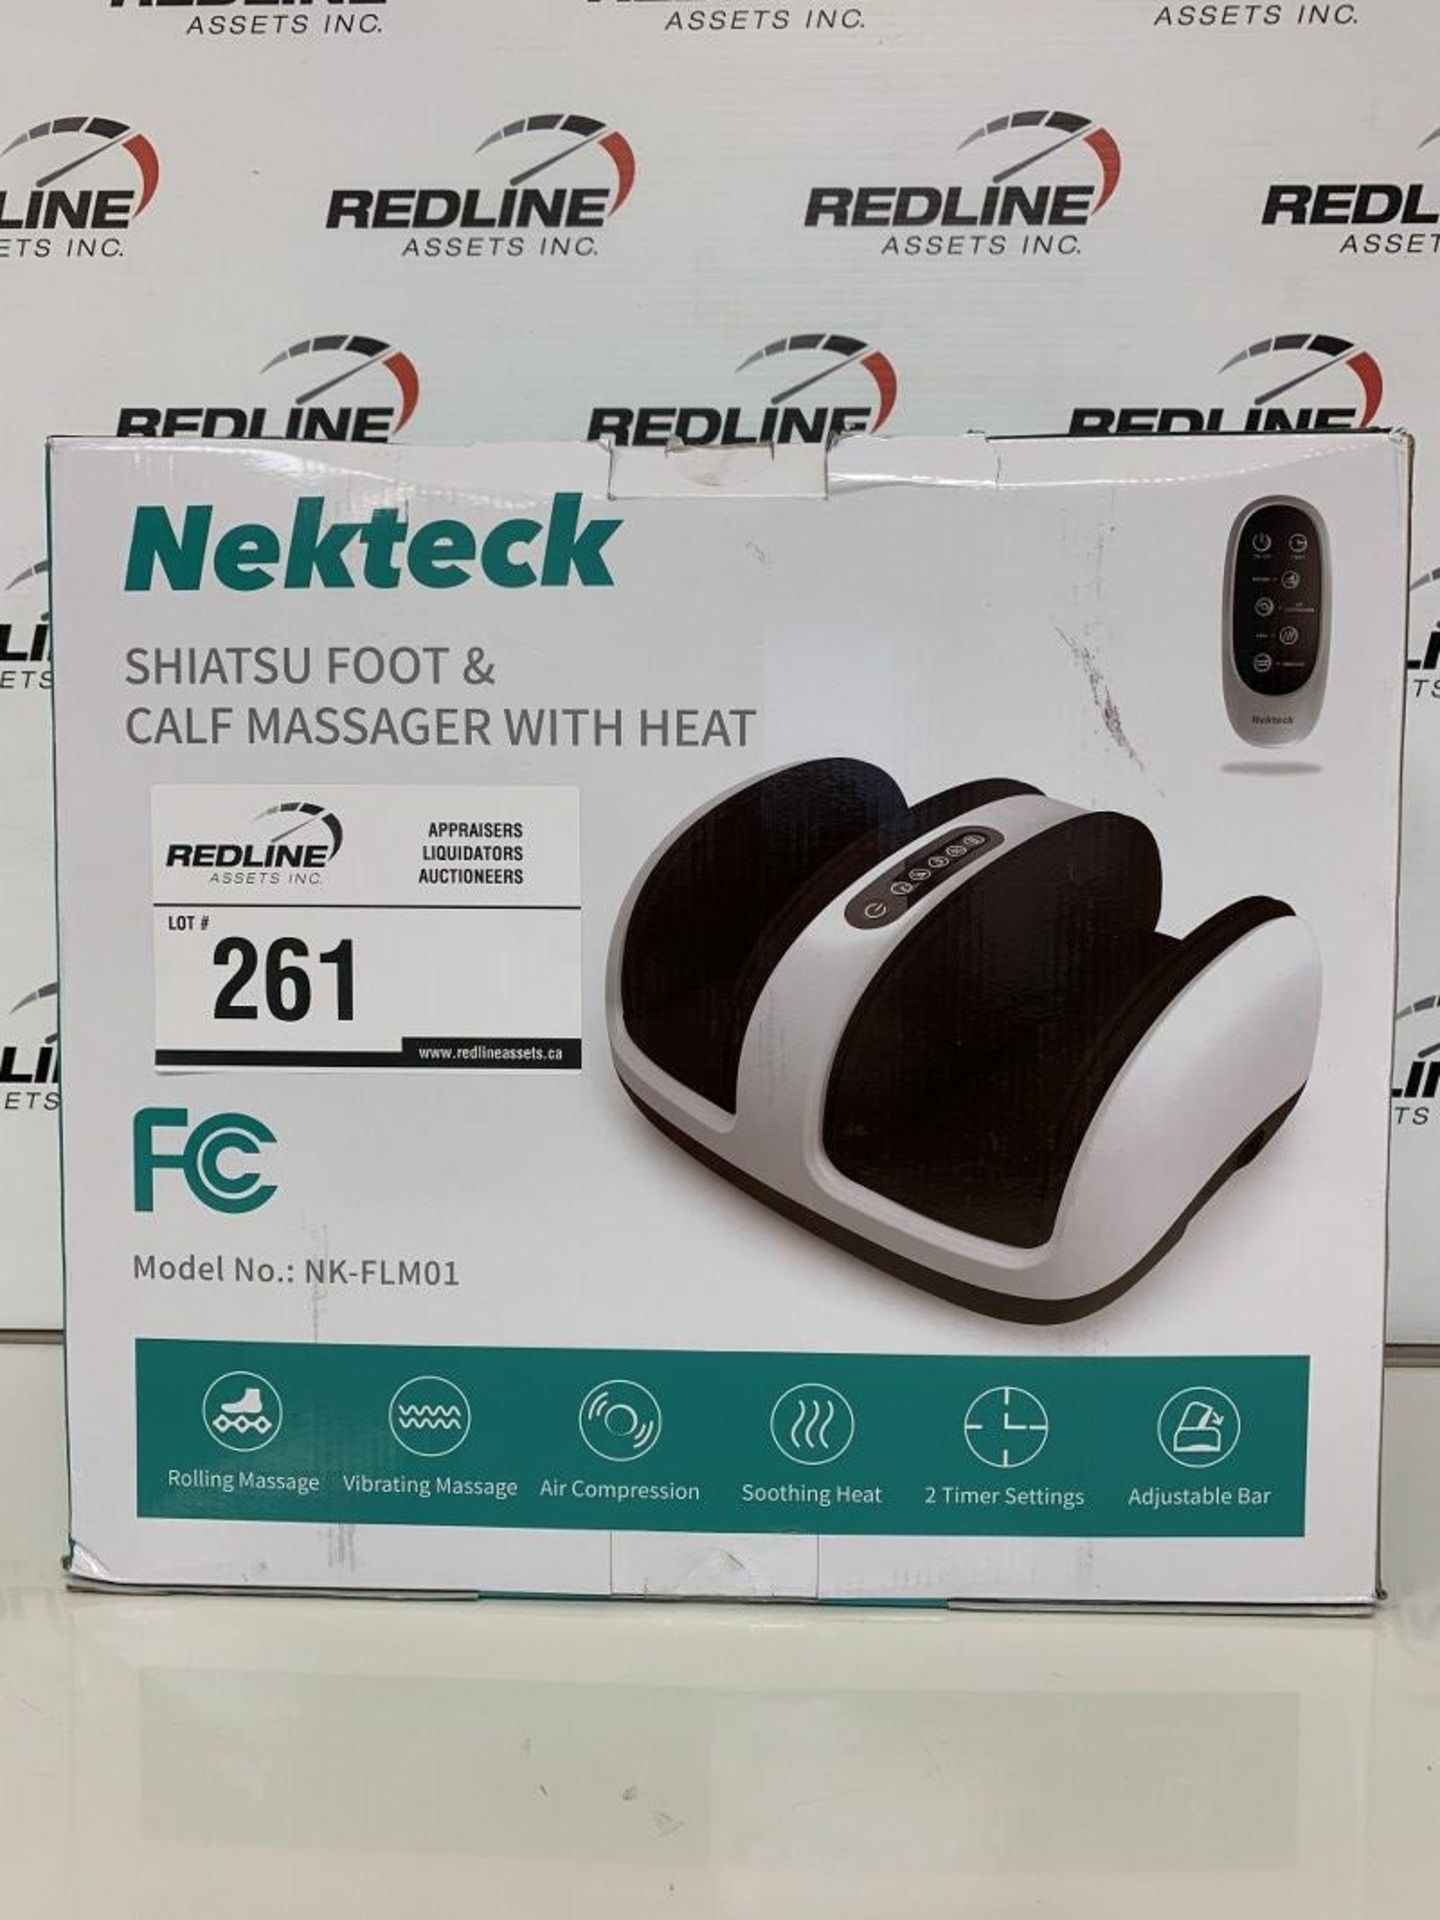 Nekteck - Shiatsu Foot & Calf Massager W/ Heat